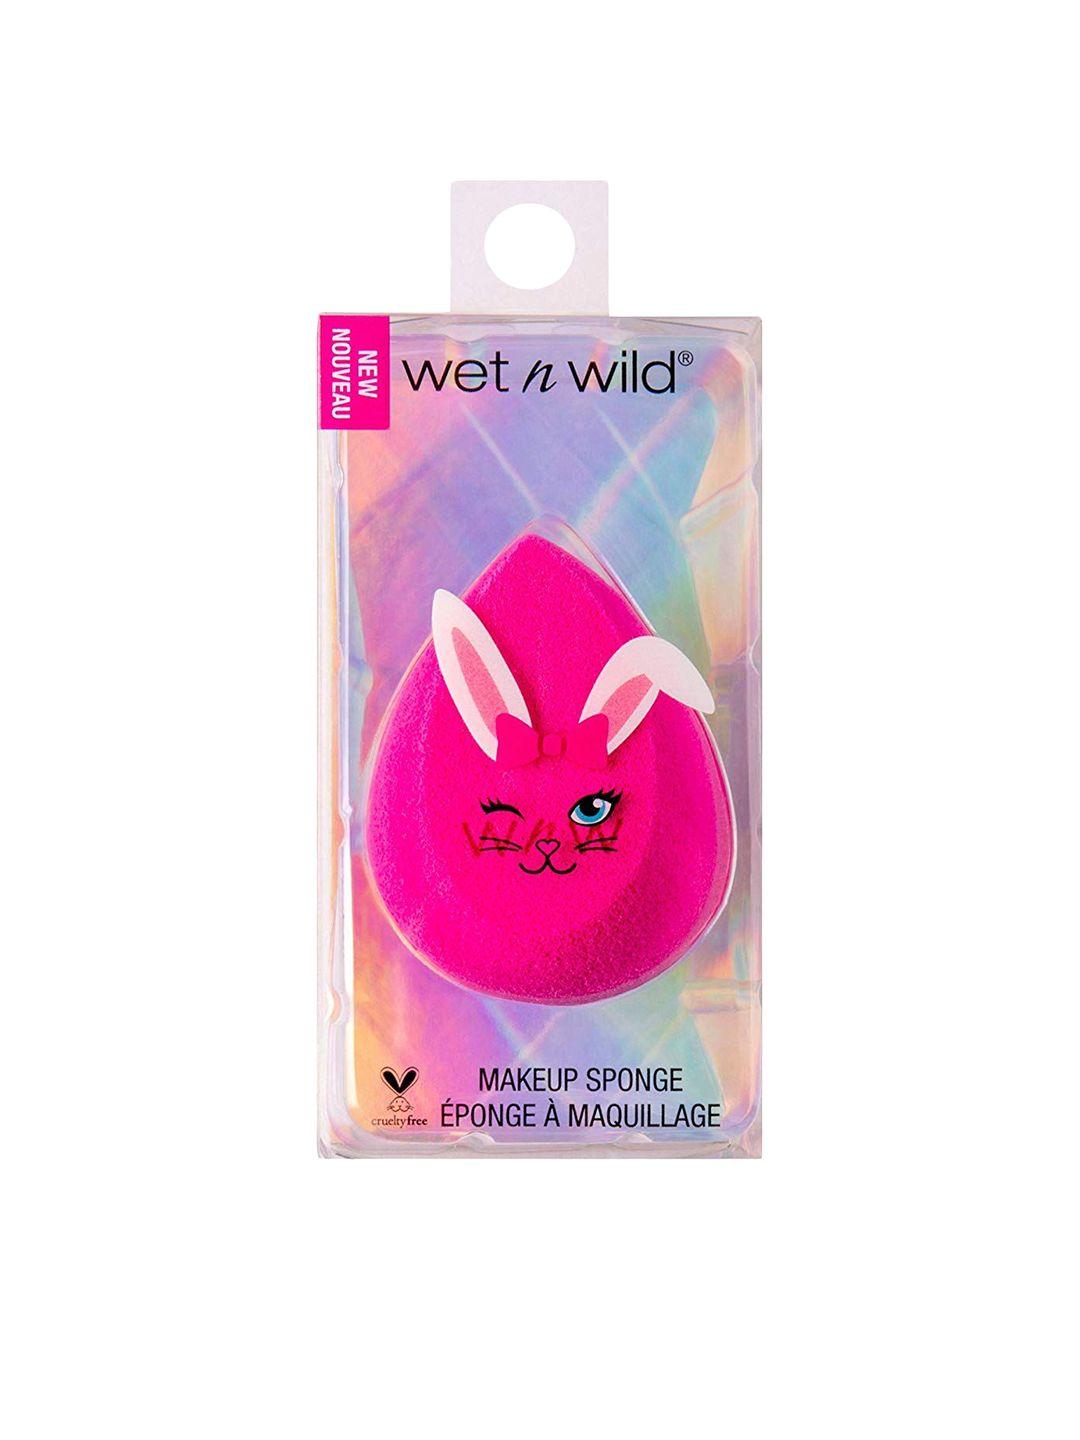 wet n wild makeup sponge applicator (e776c)